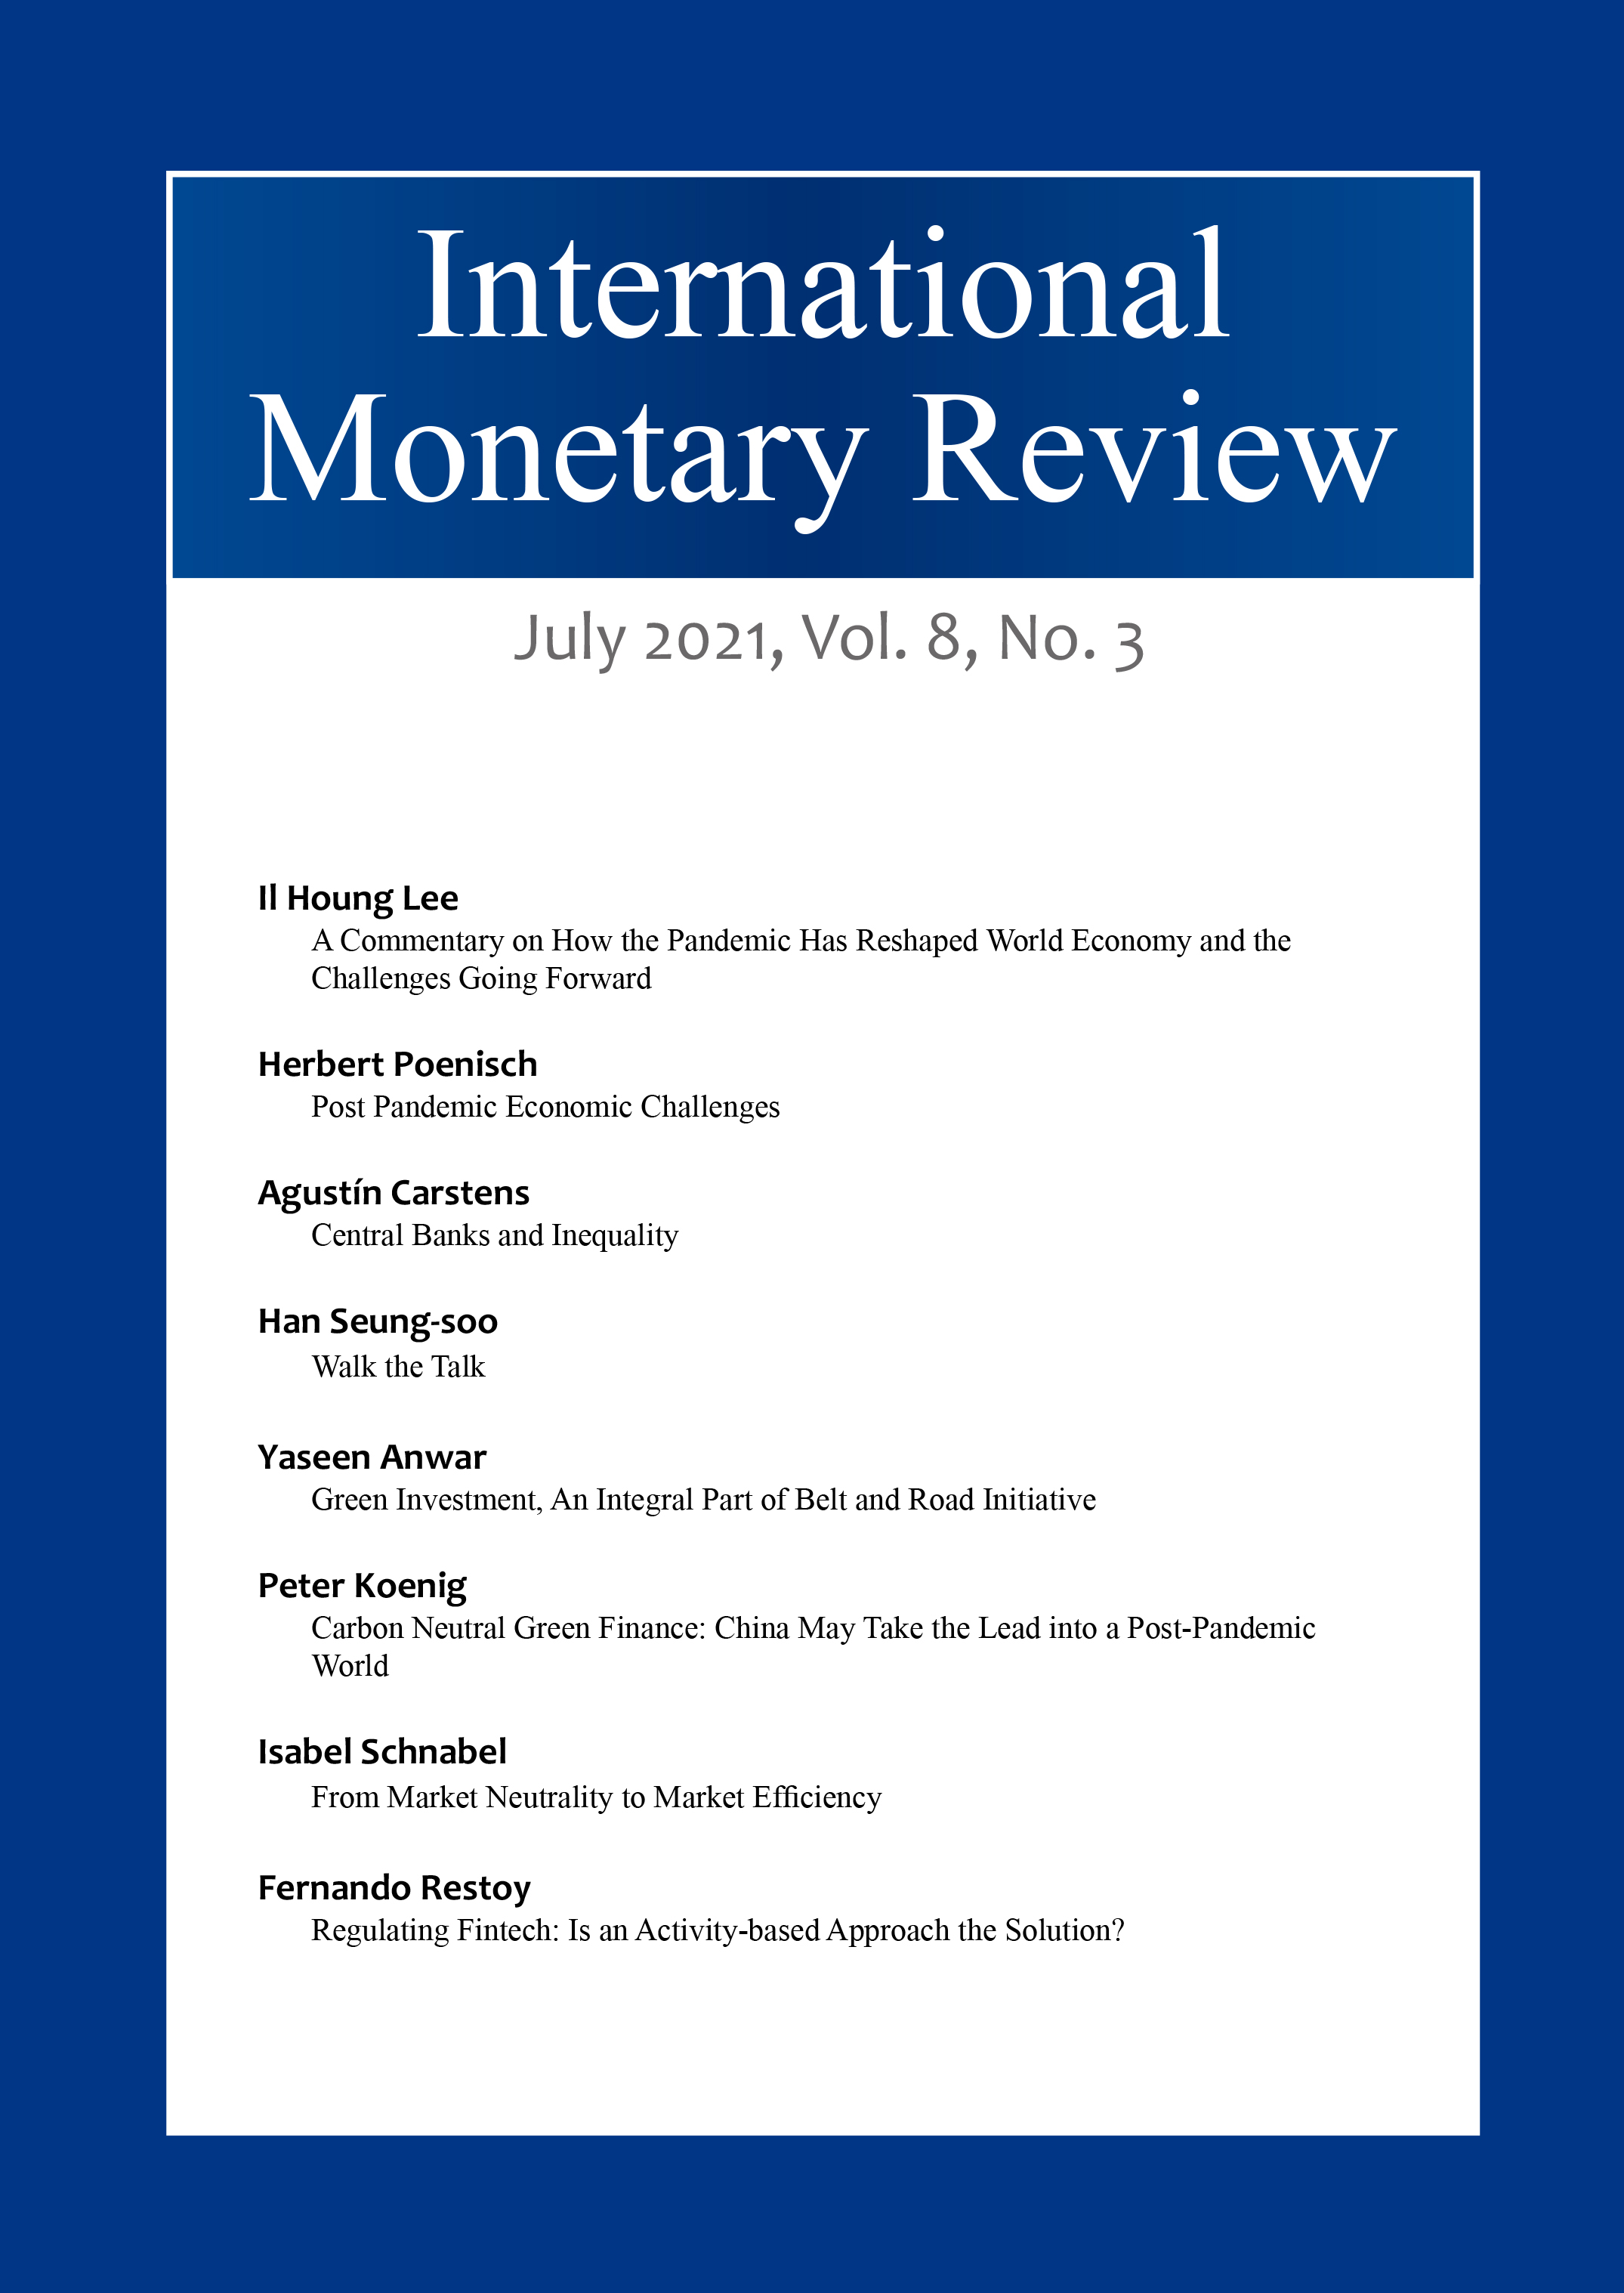 International Monetary Review, July 2021, Vol.8 No.3